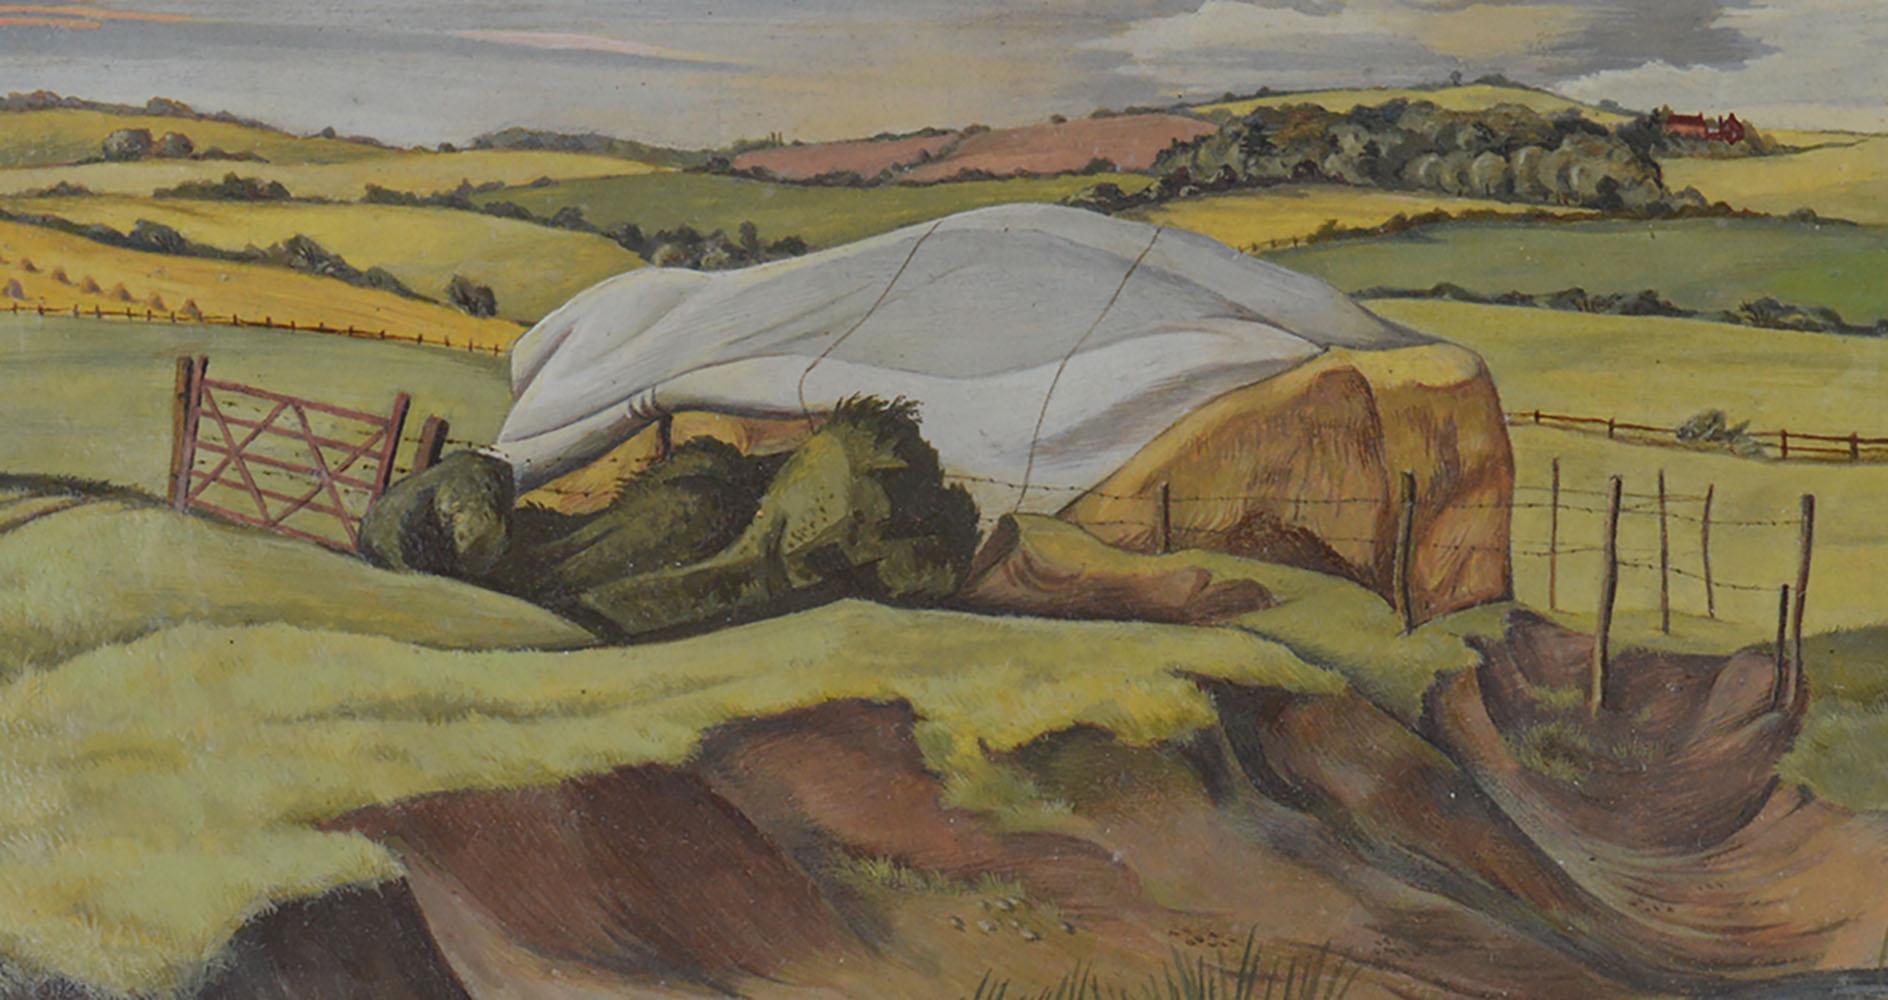 Painted Stylized English Landscape, Michael Lord, 1940s